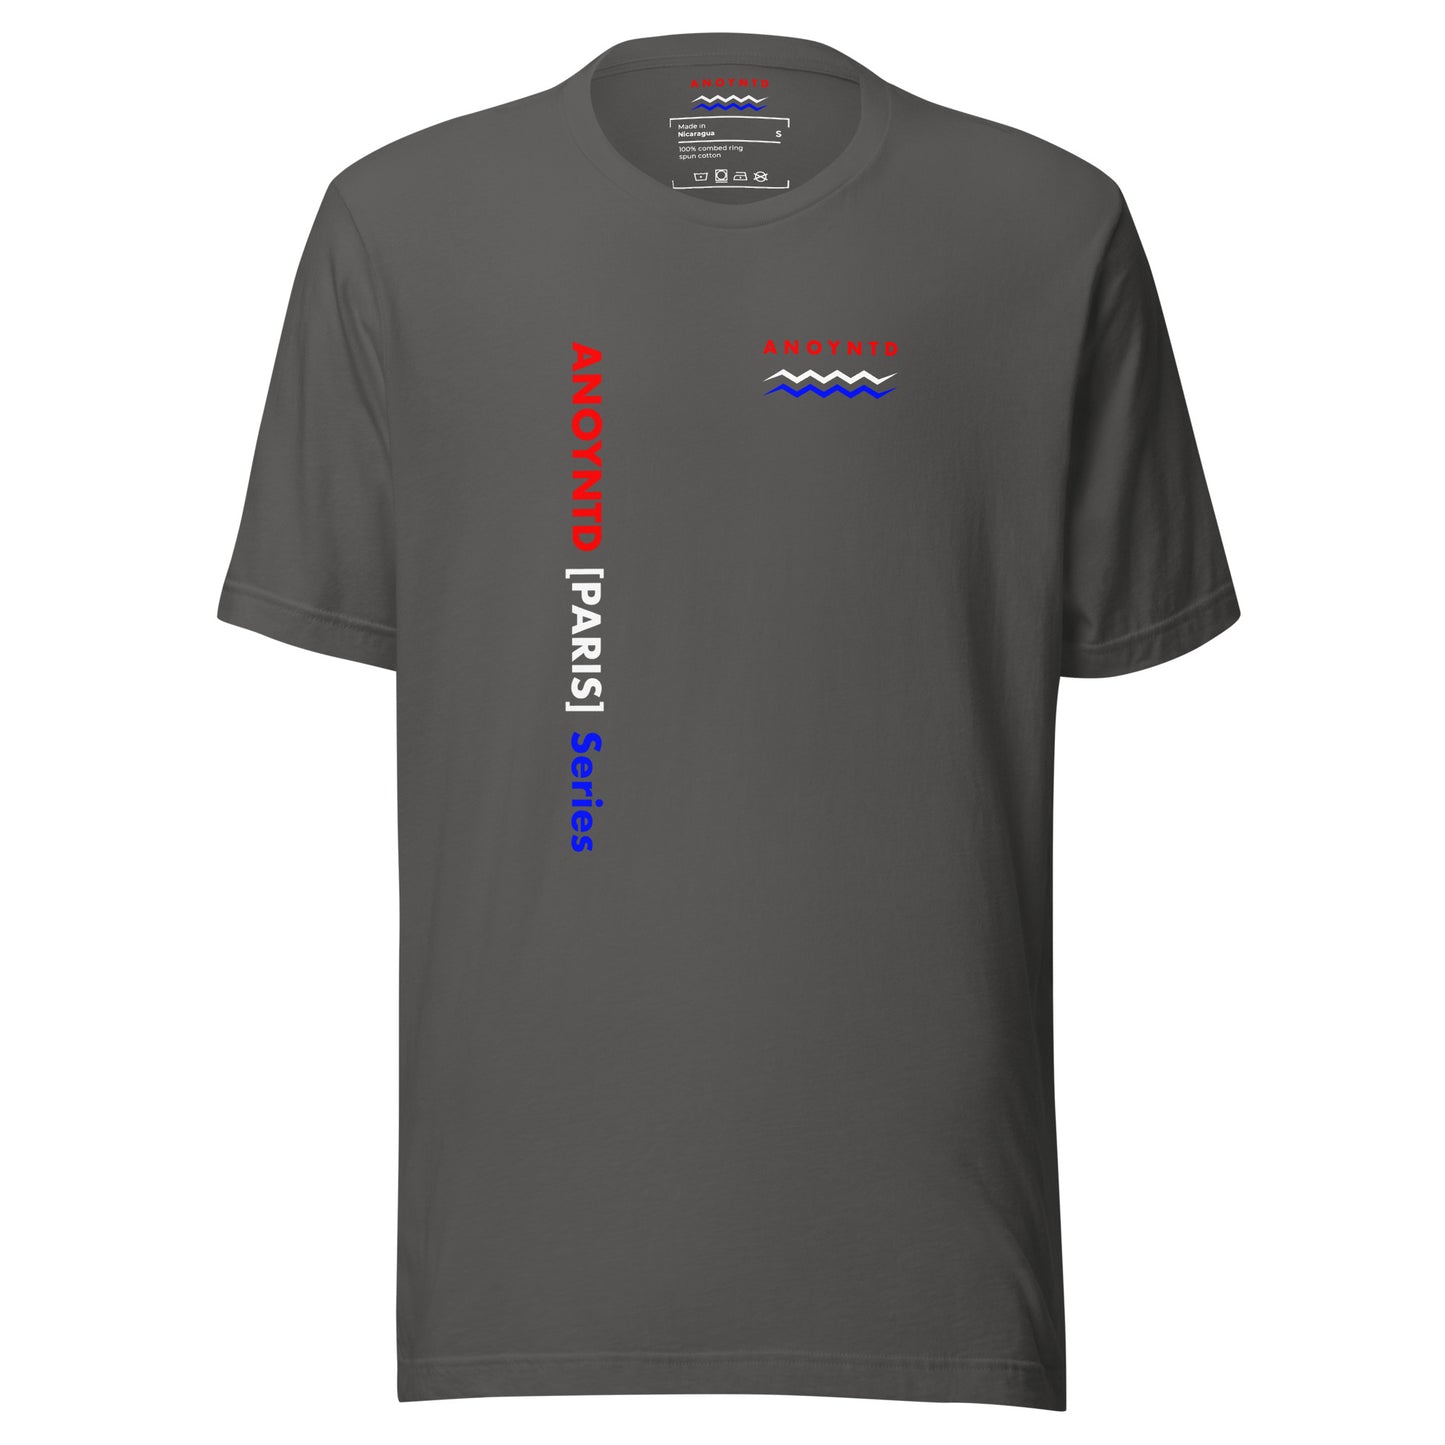 ANOYNTD [PARIS] Series Unisex t-shirt